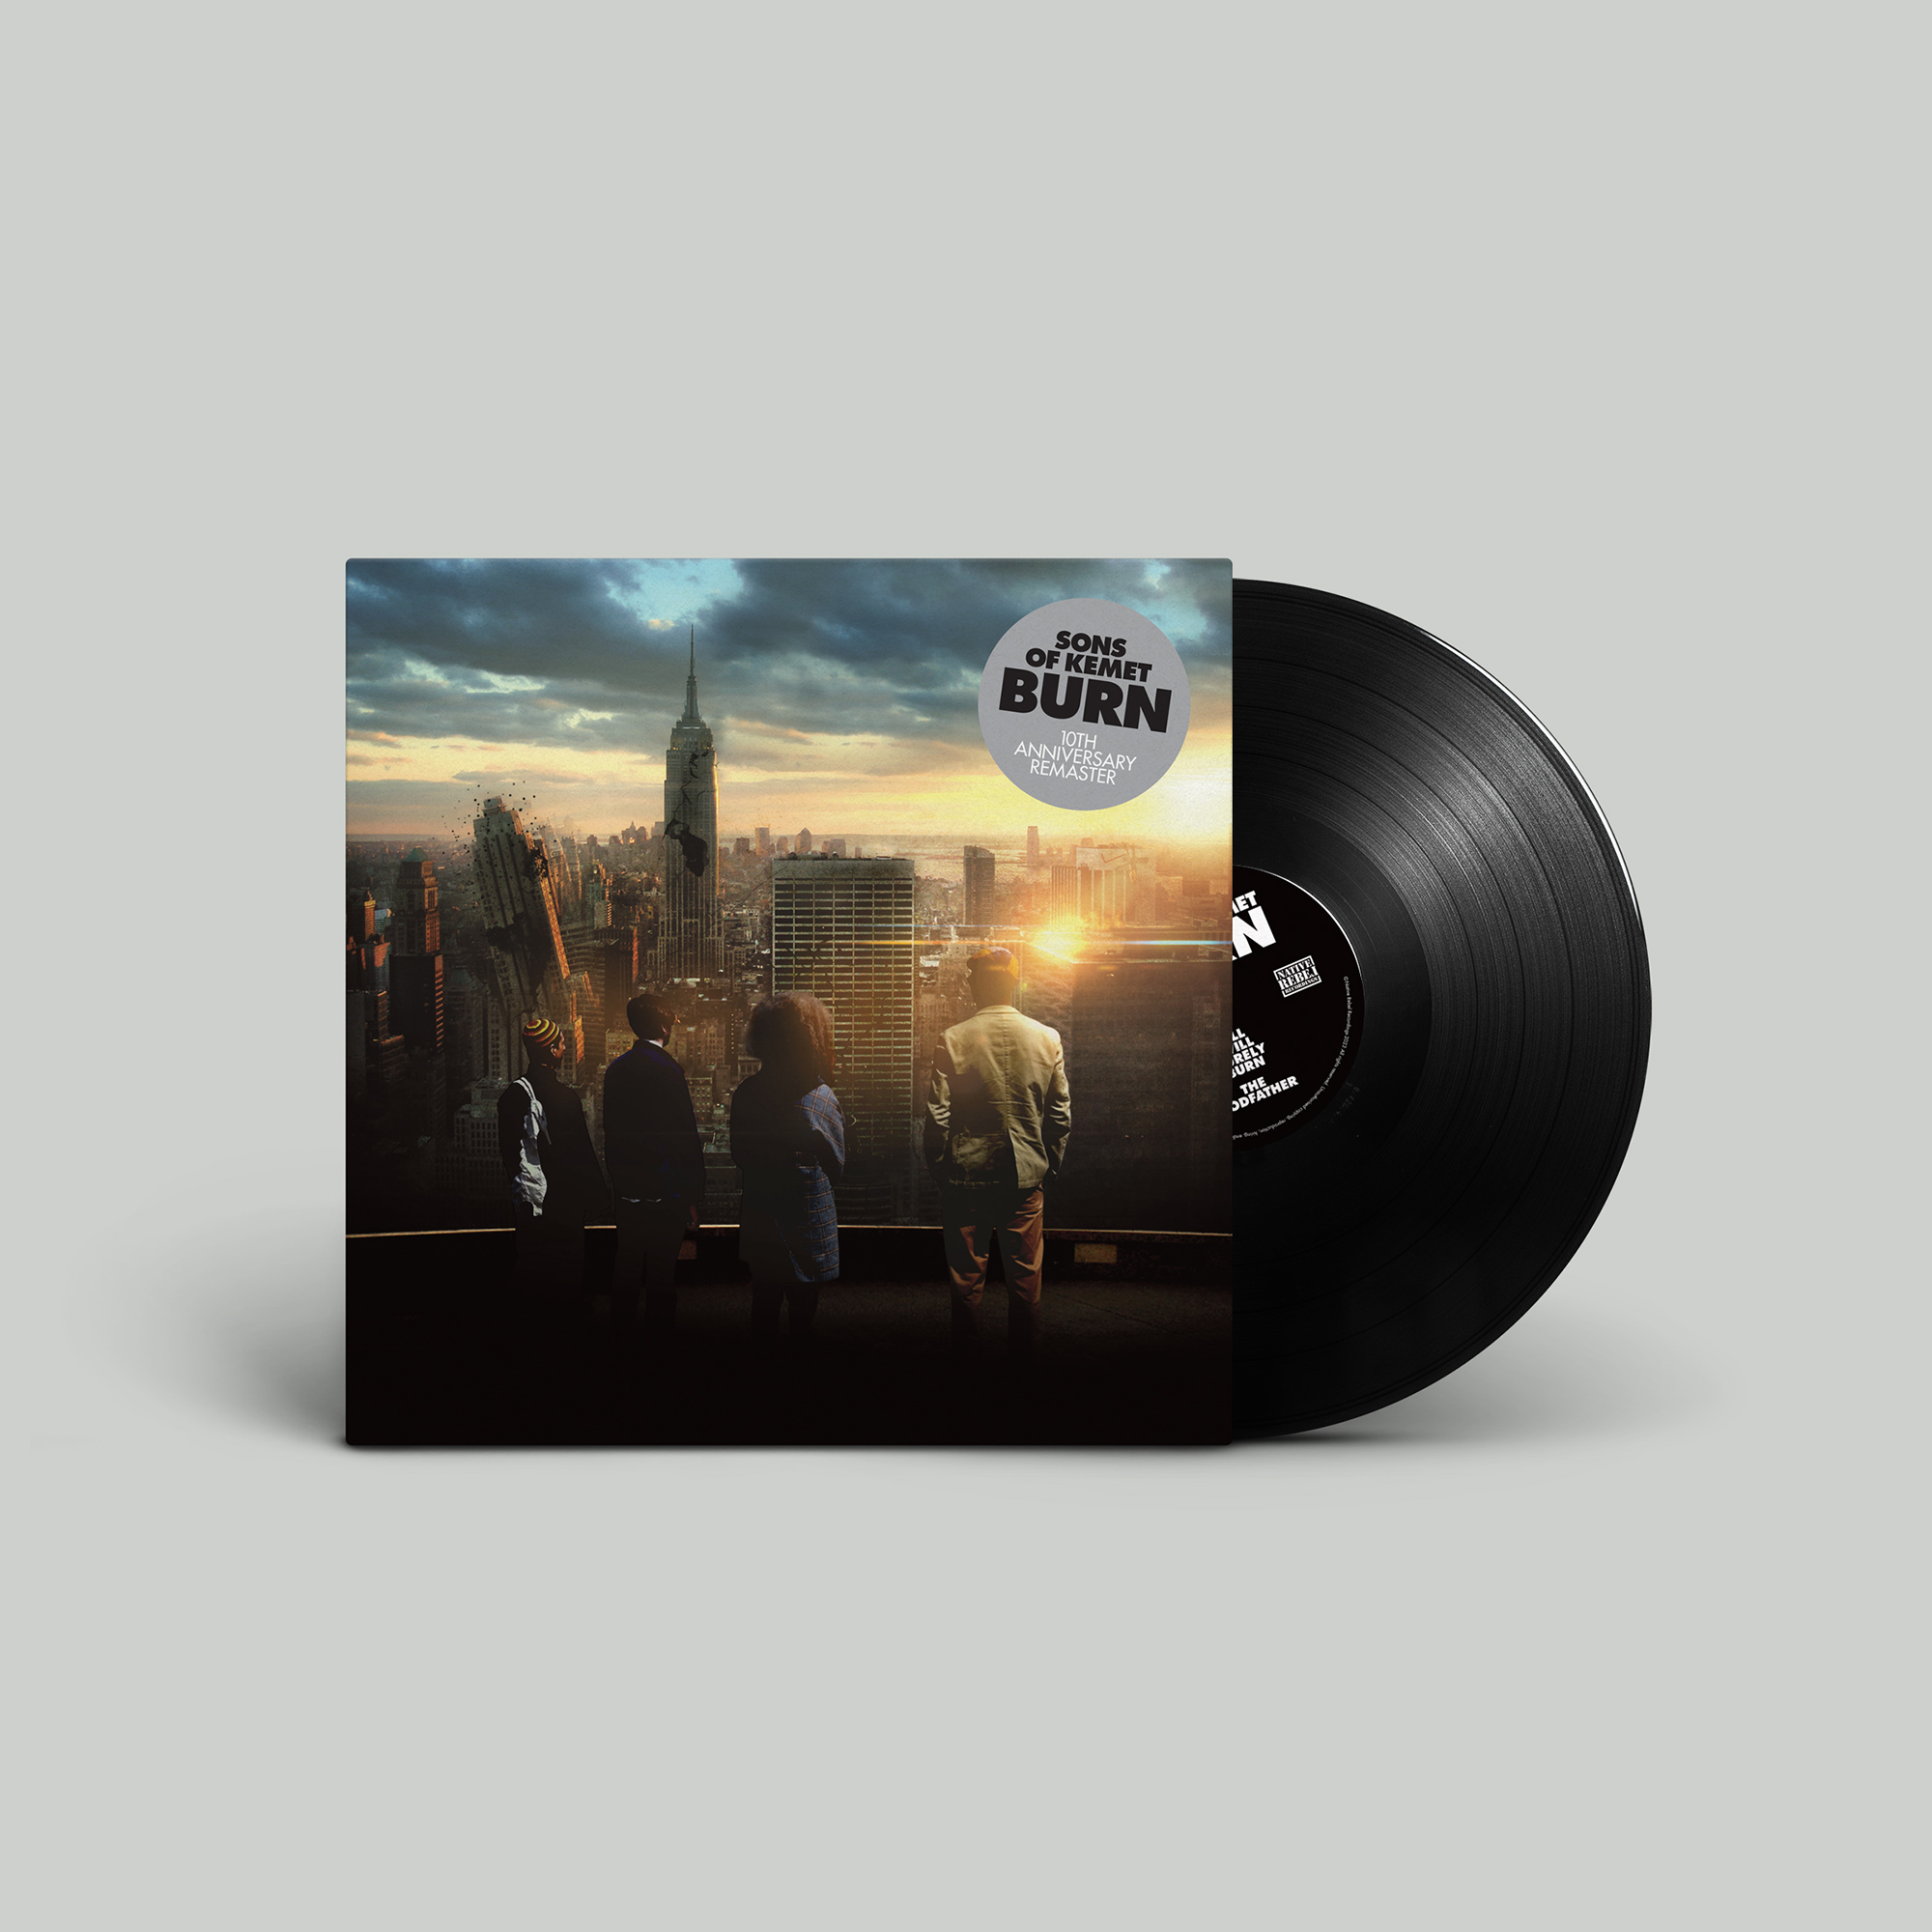 Sons of Kemet - Burn (10th Anniversary Remaster): Vinyl 2LP